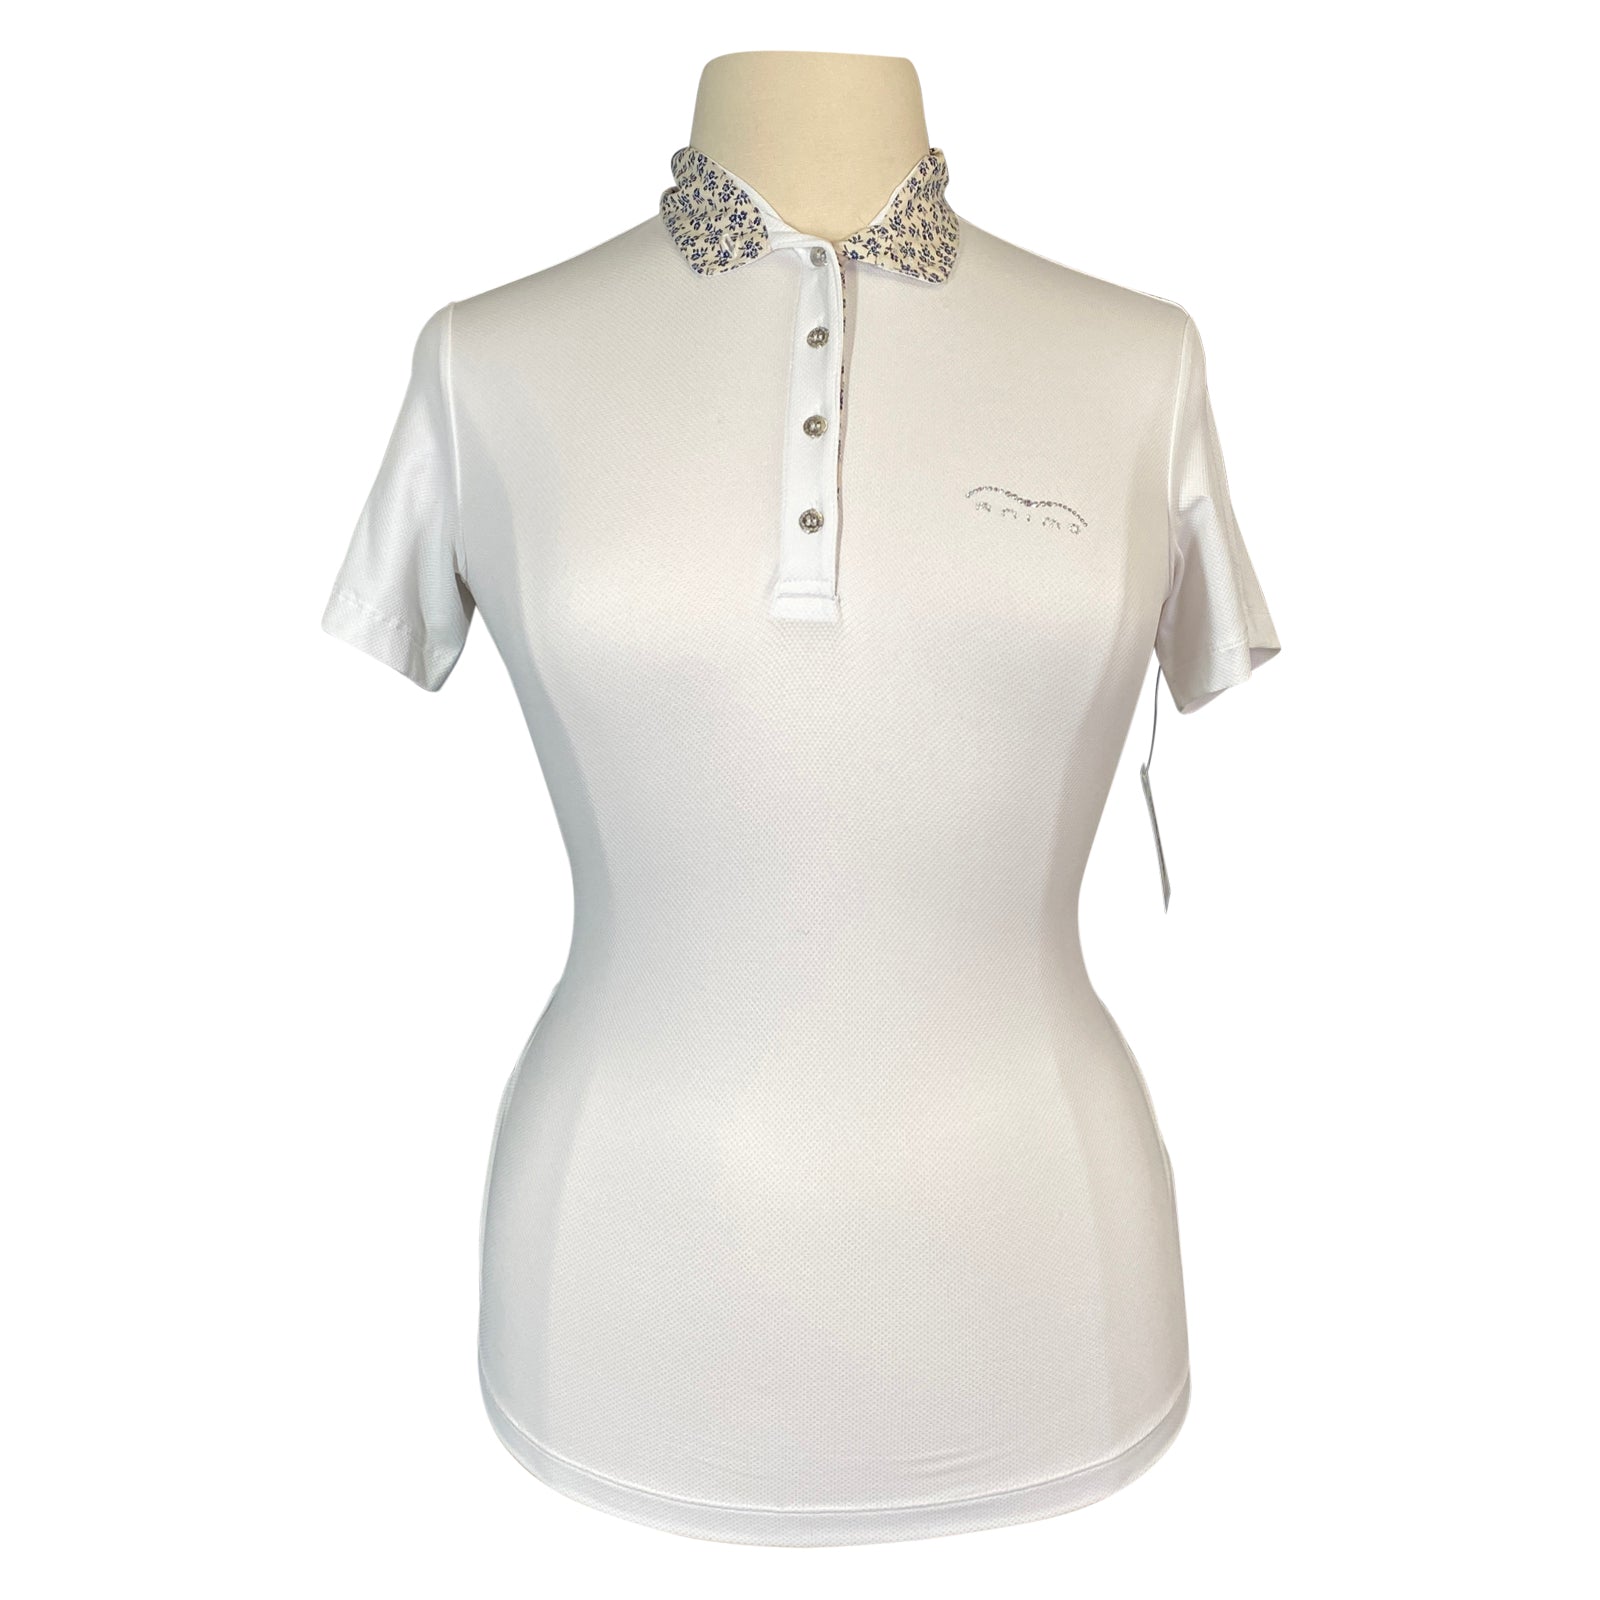 Animo &#39;Basilea&#39; Short Sleeve Show Shirt in White/Tan Floral Collar